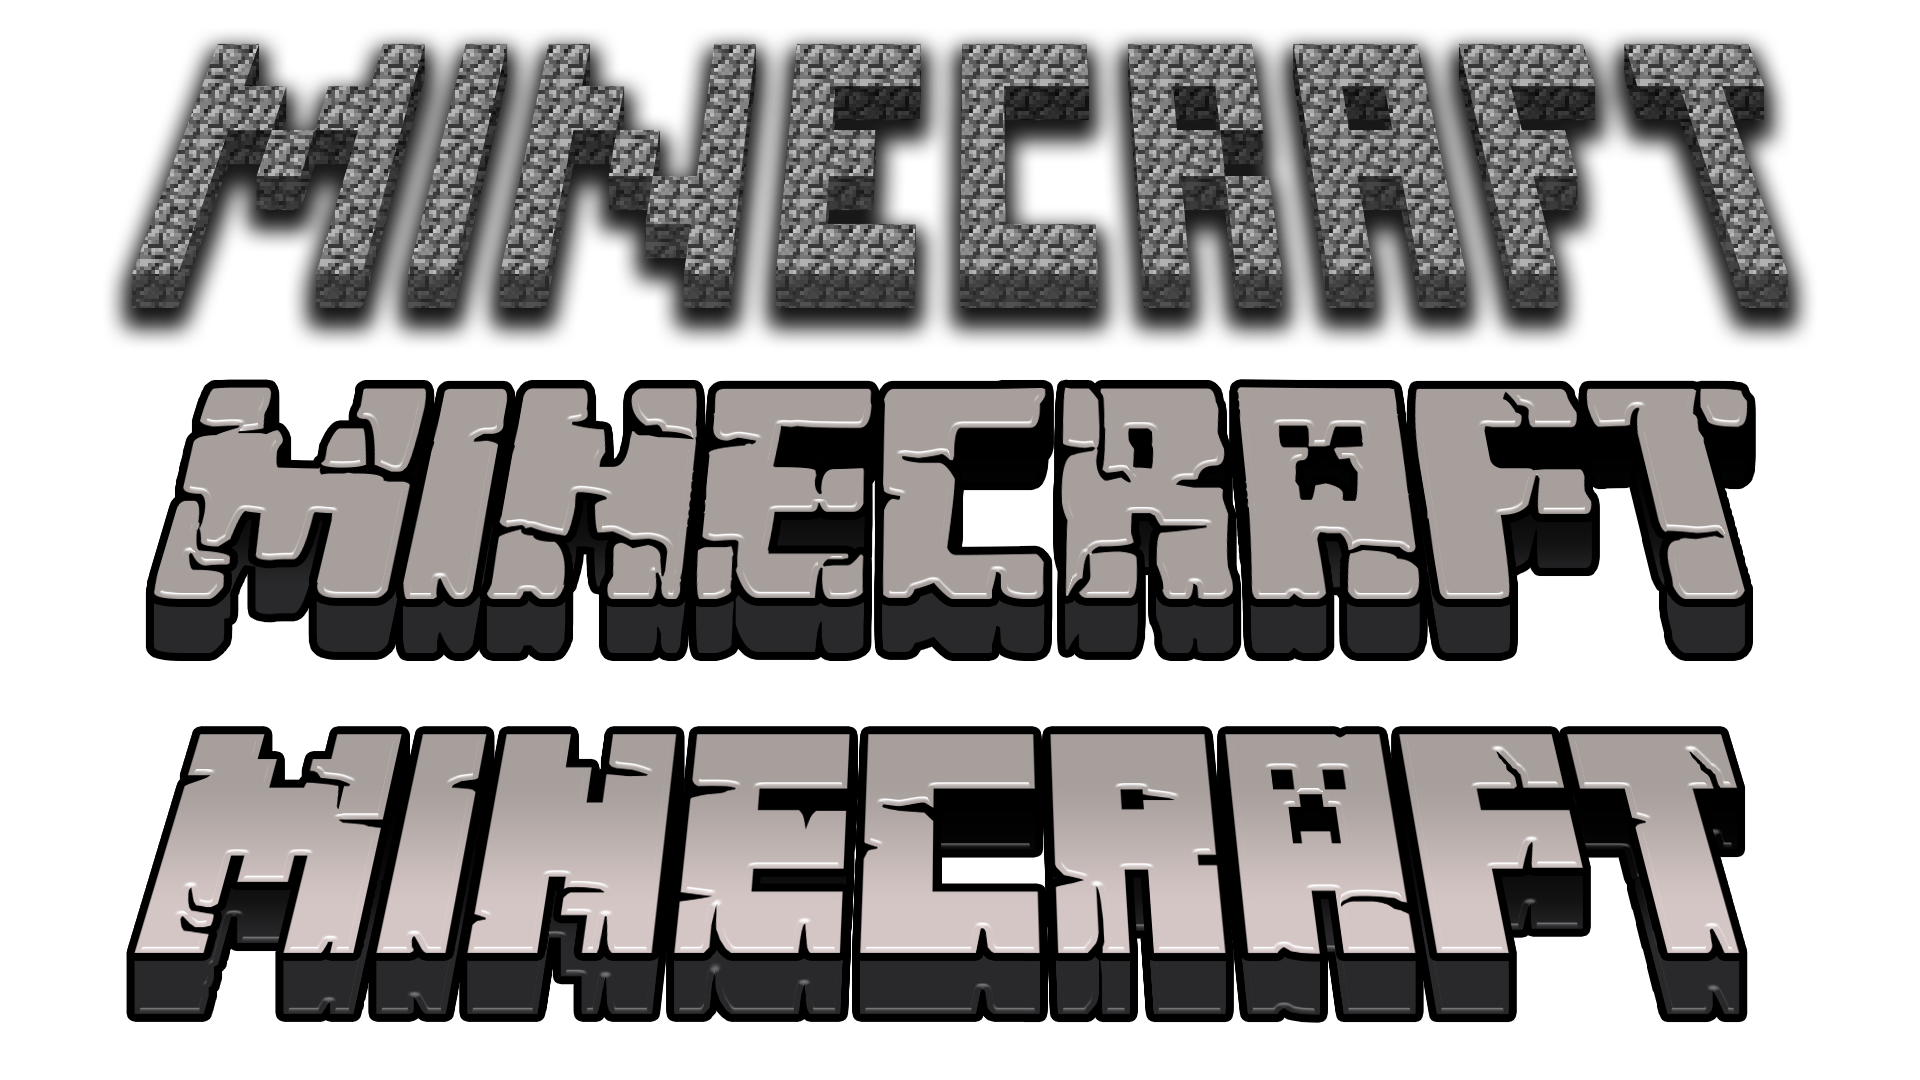 minecraft logo transparent